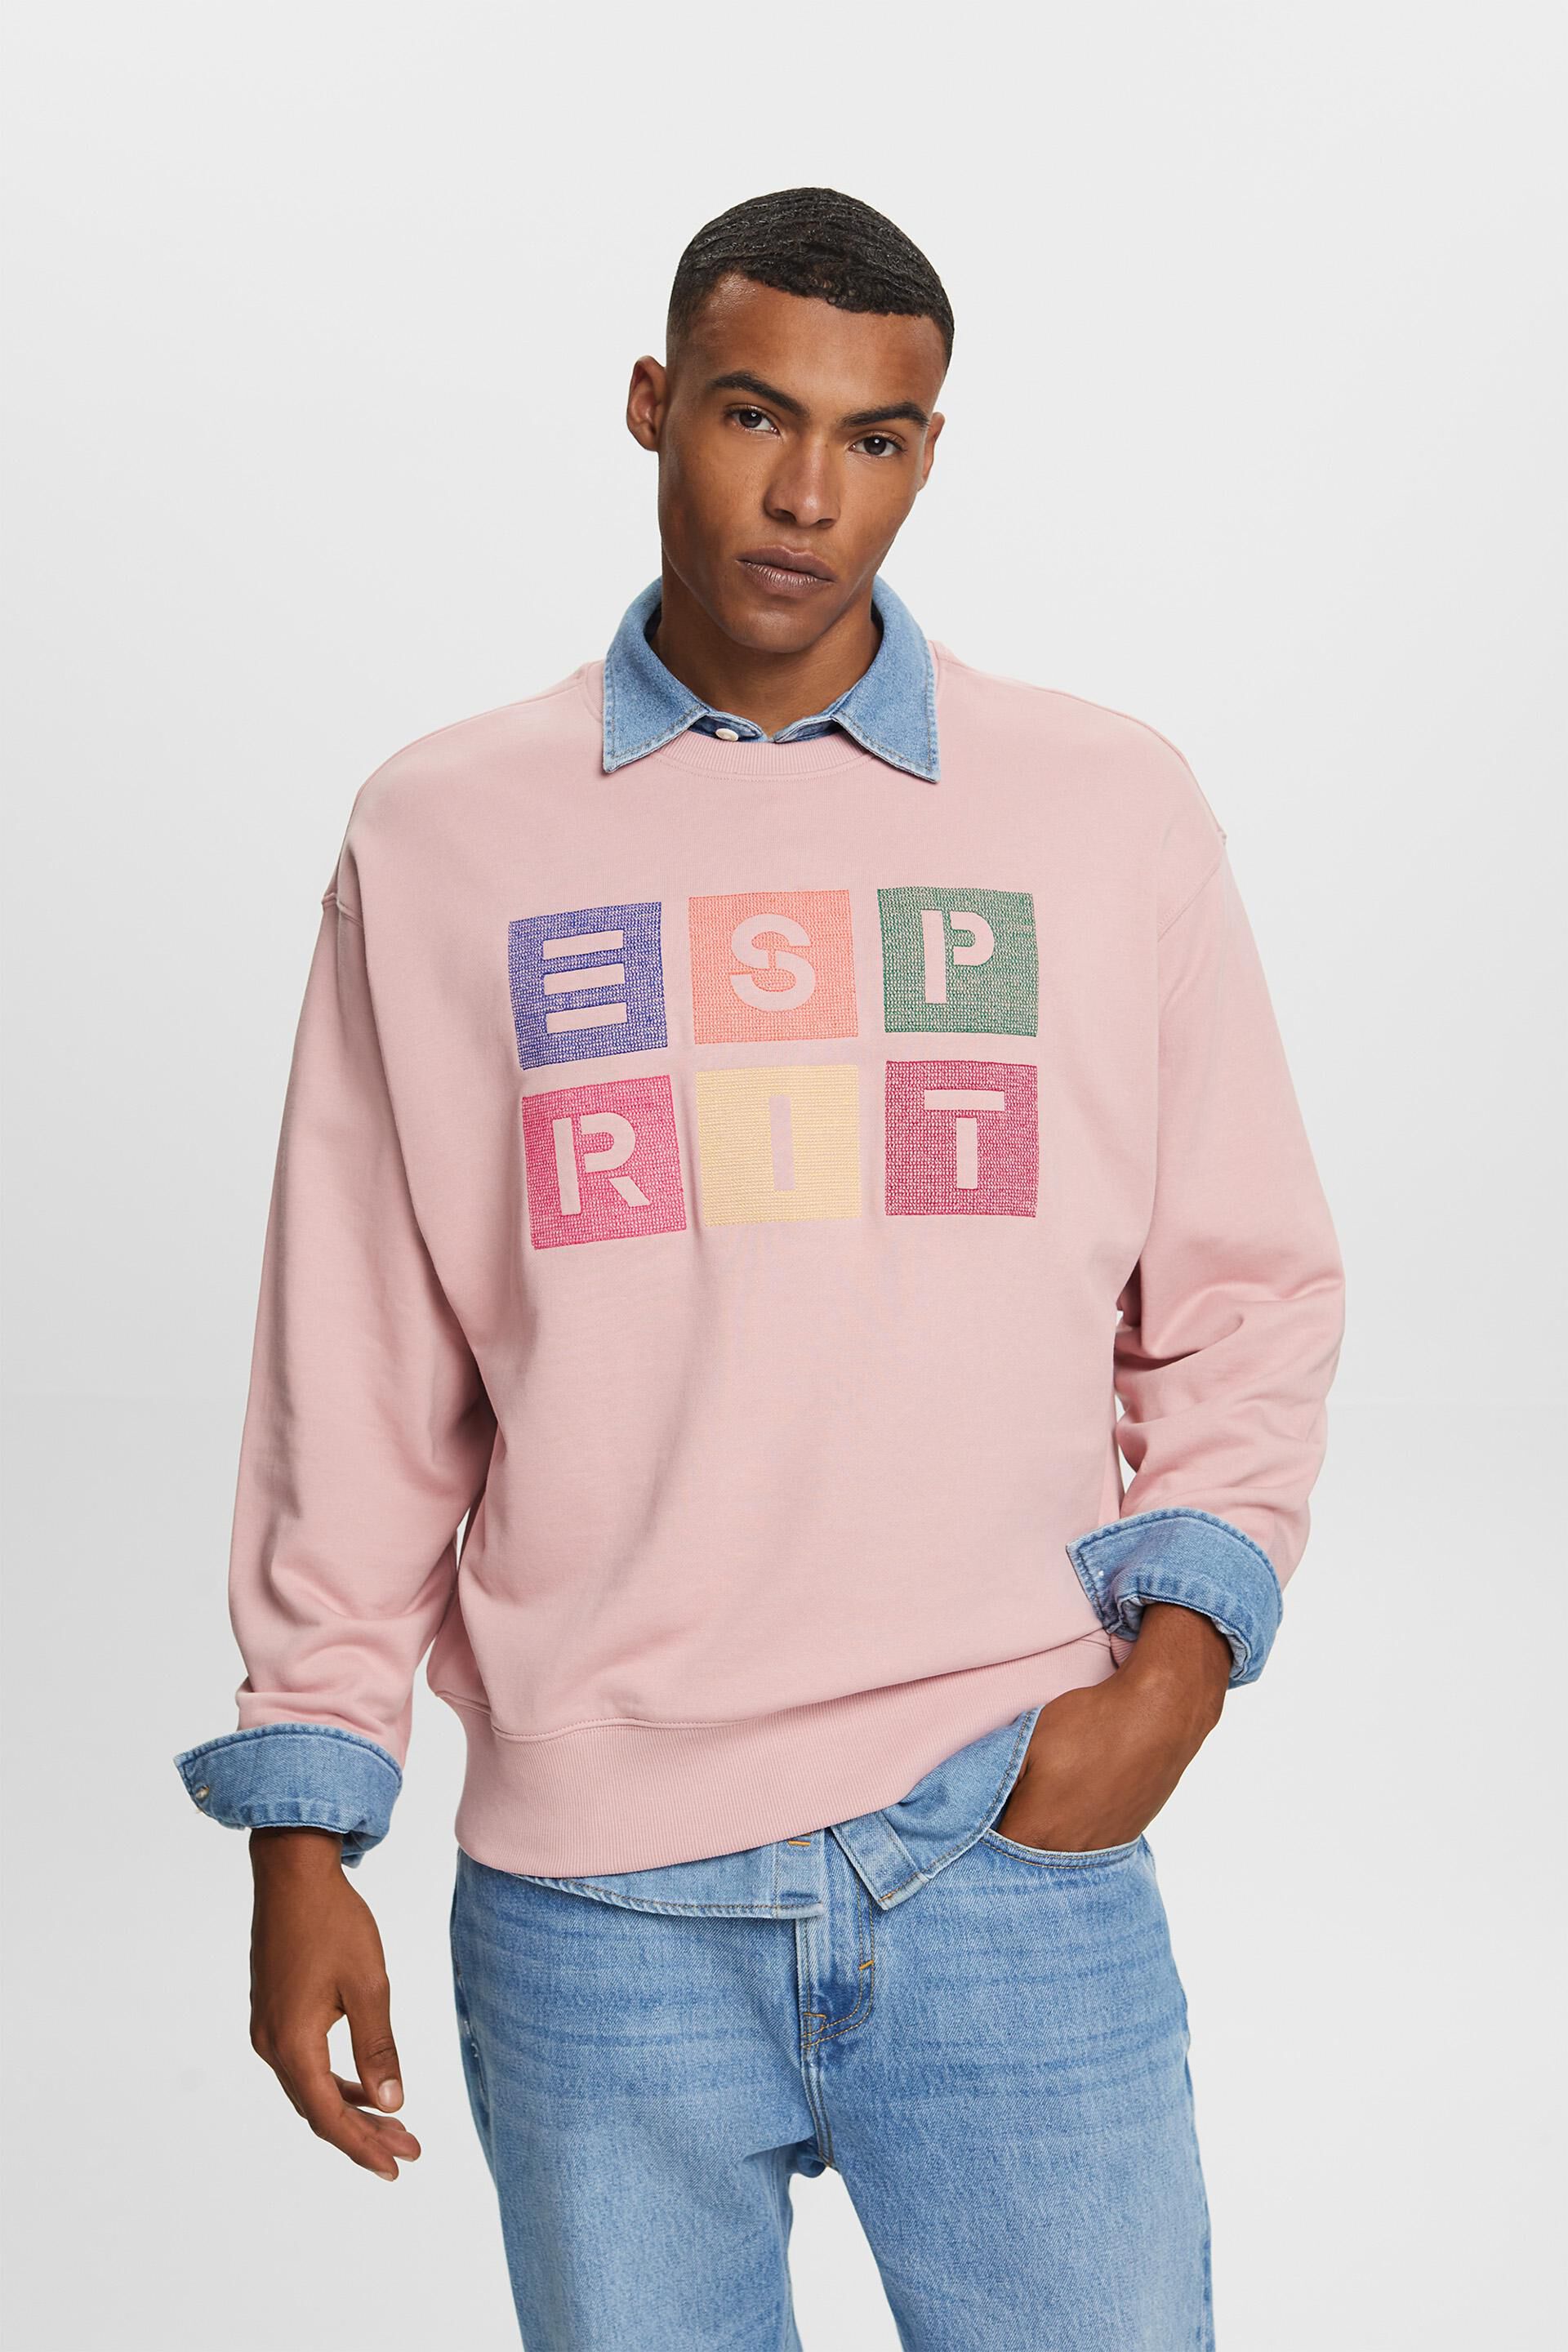 Esprit organic Logo cotton 100% sweatshirt,